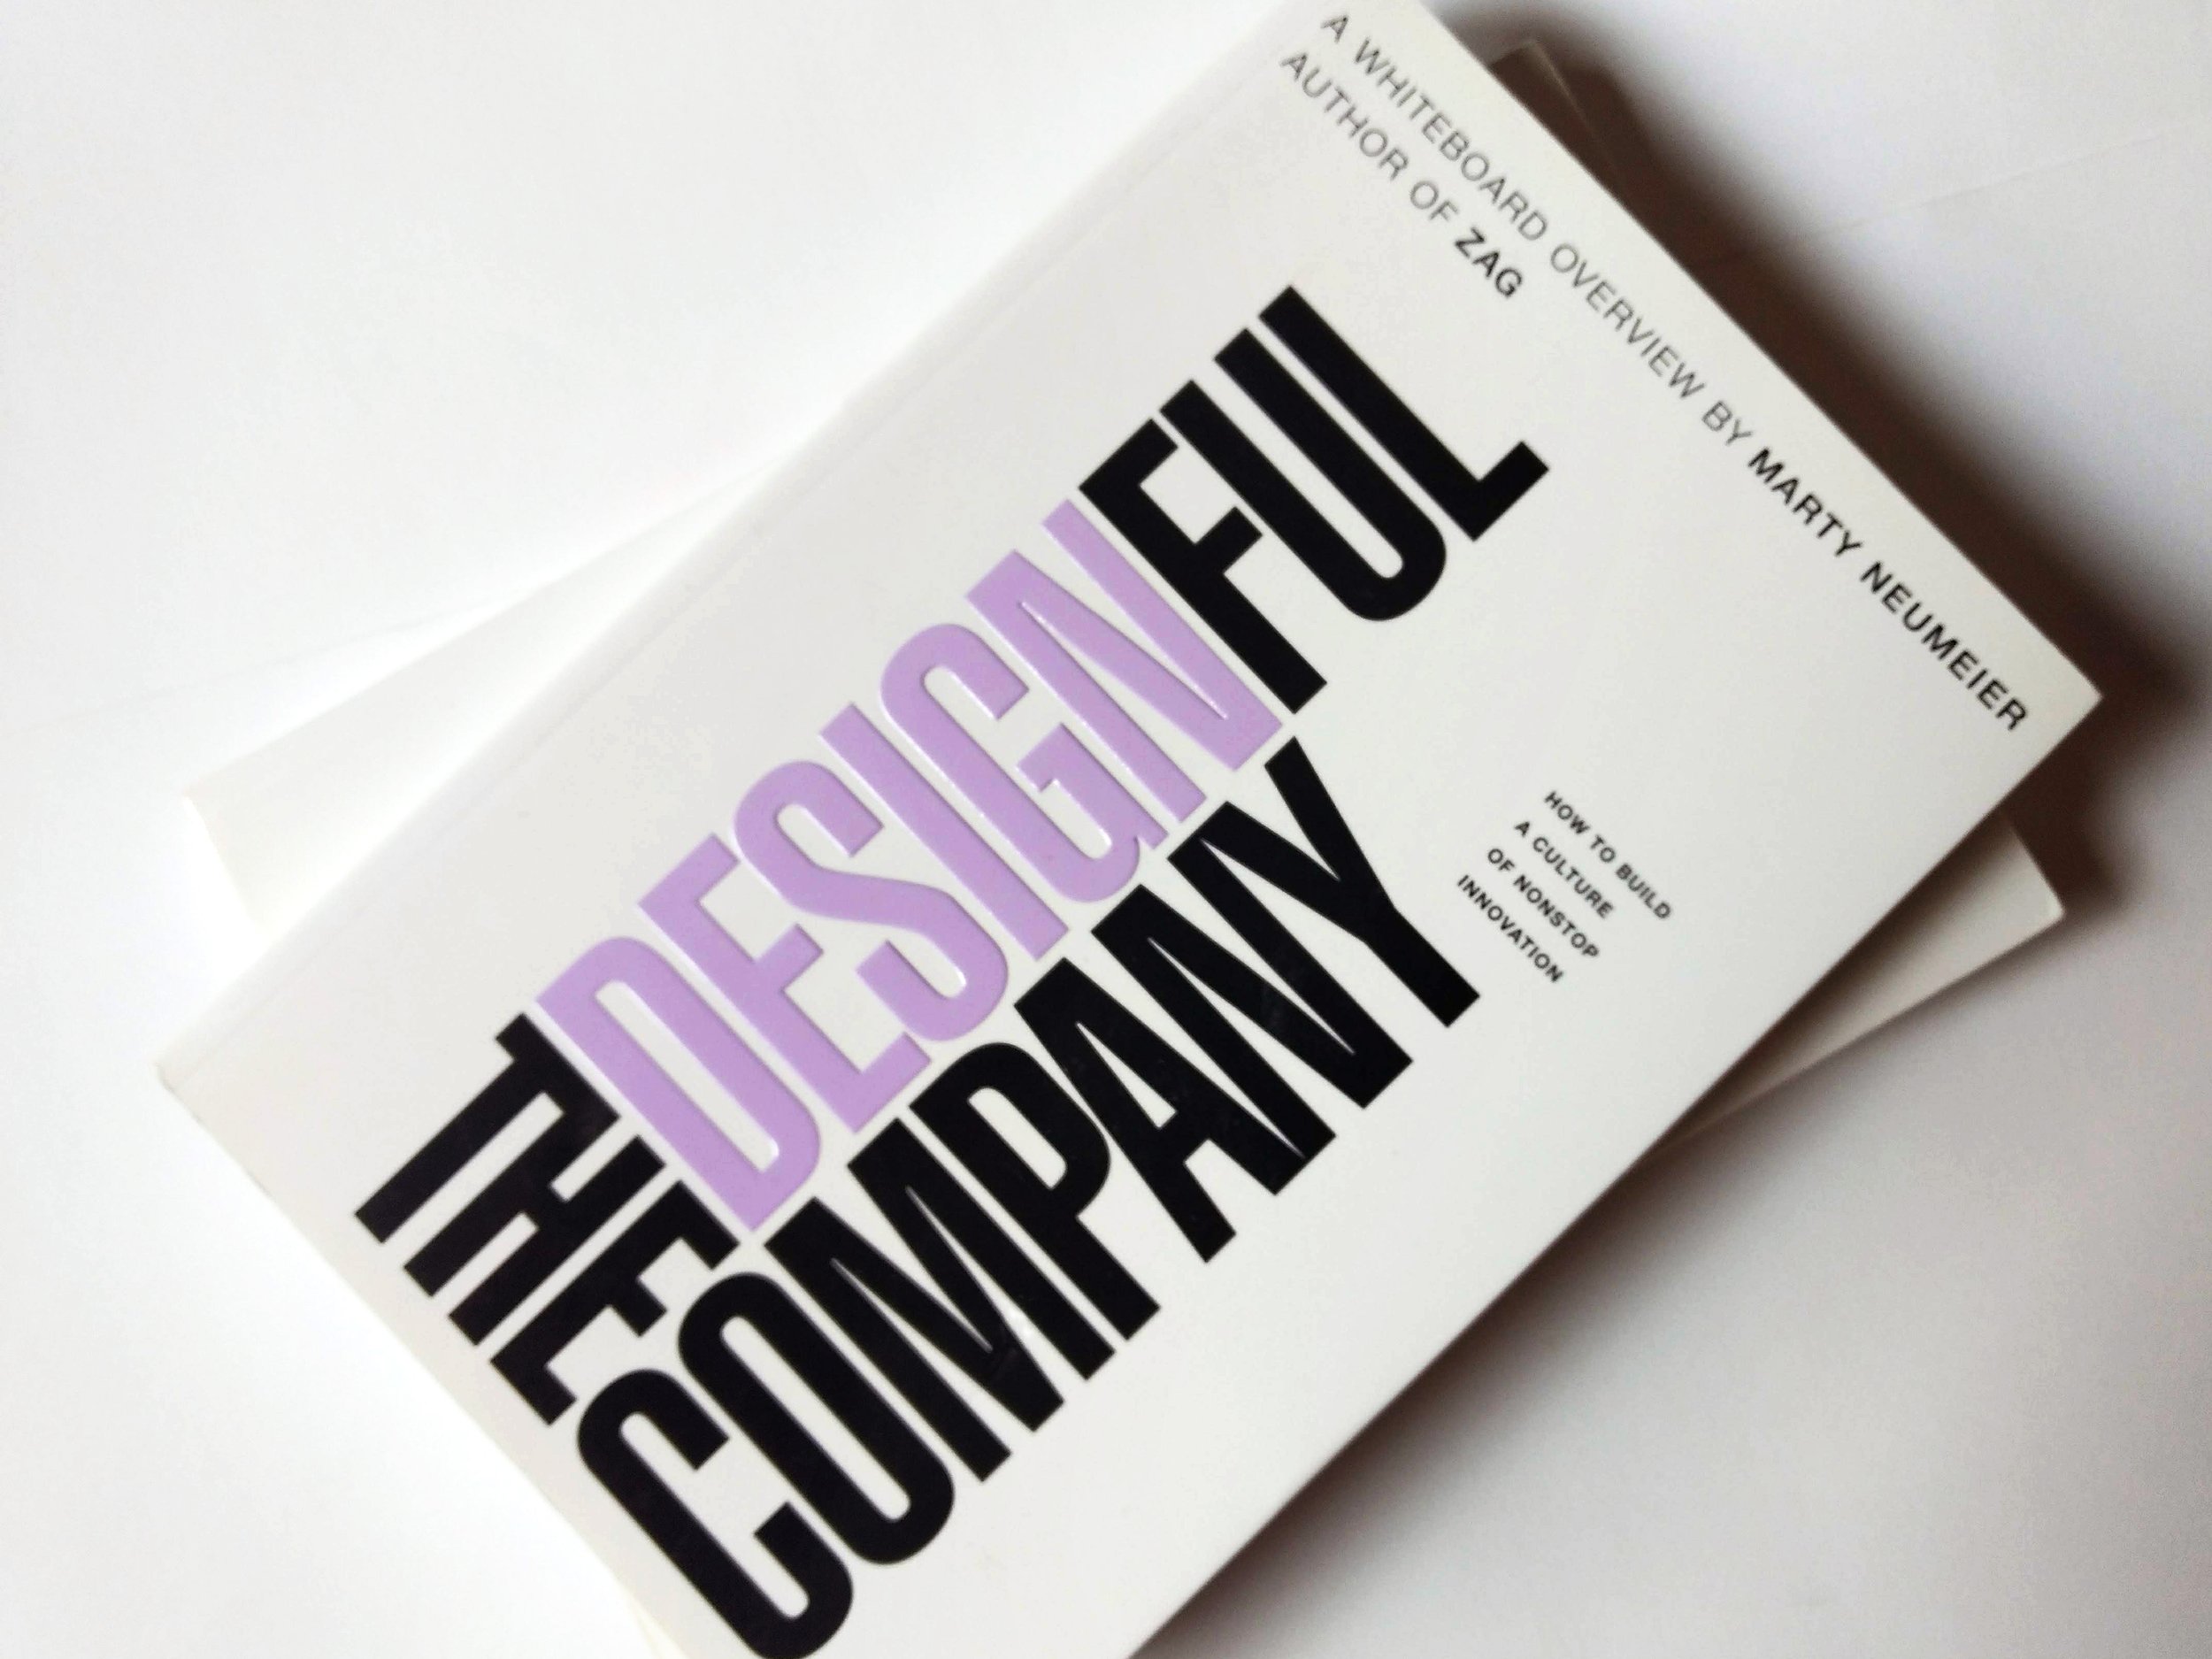 Designful_Company_book_cover.jpg